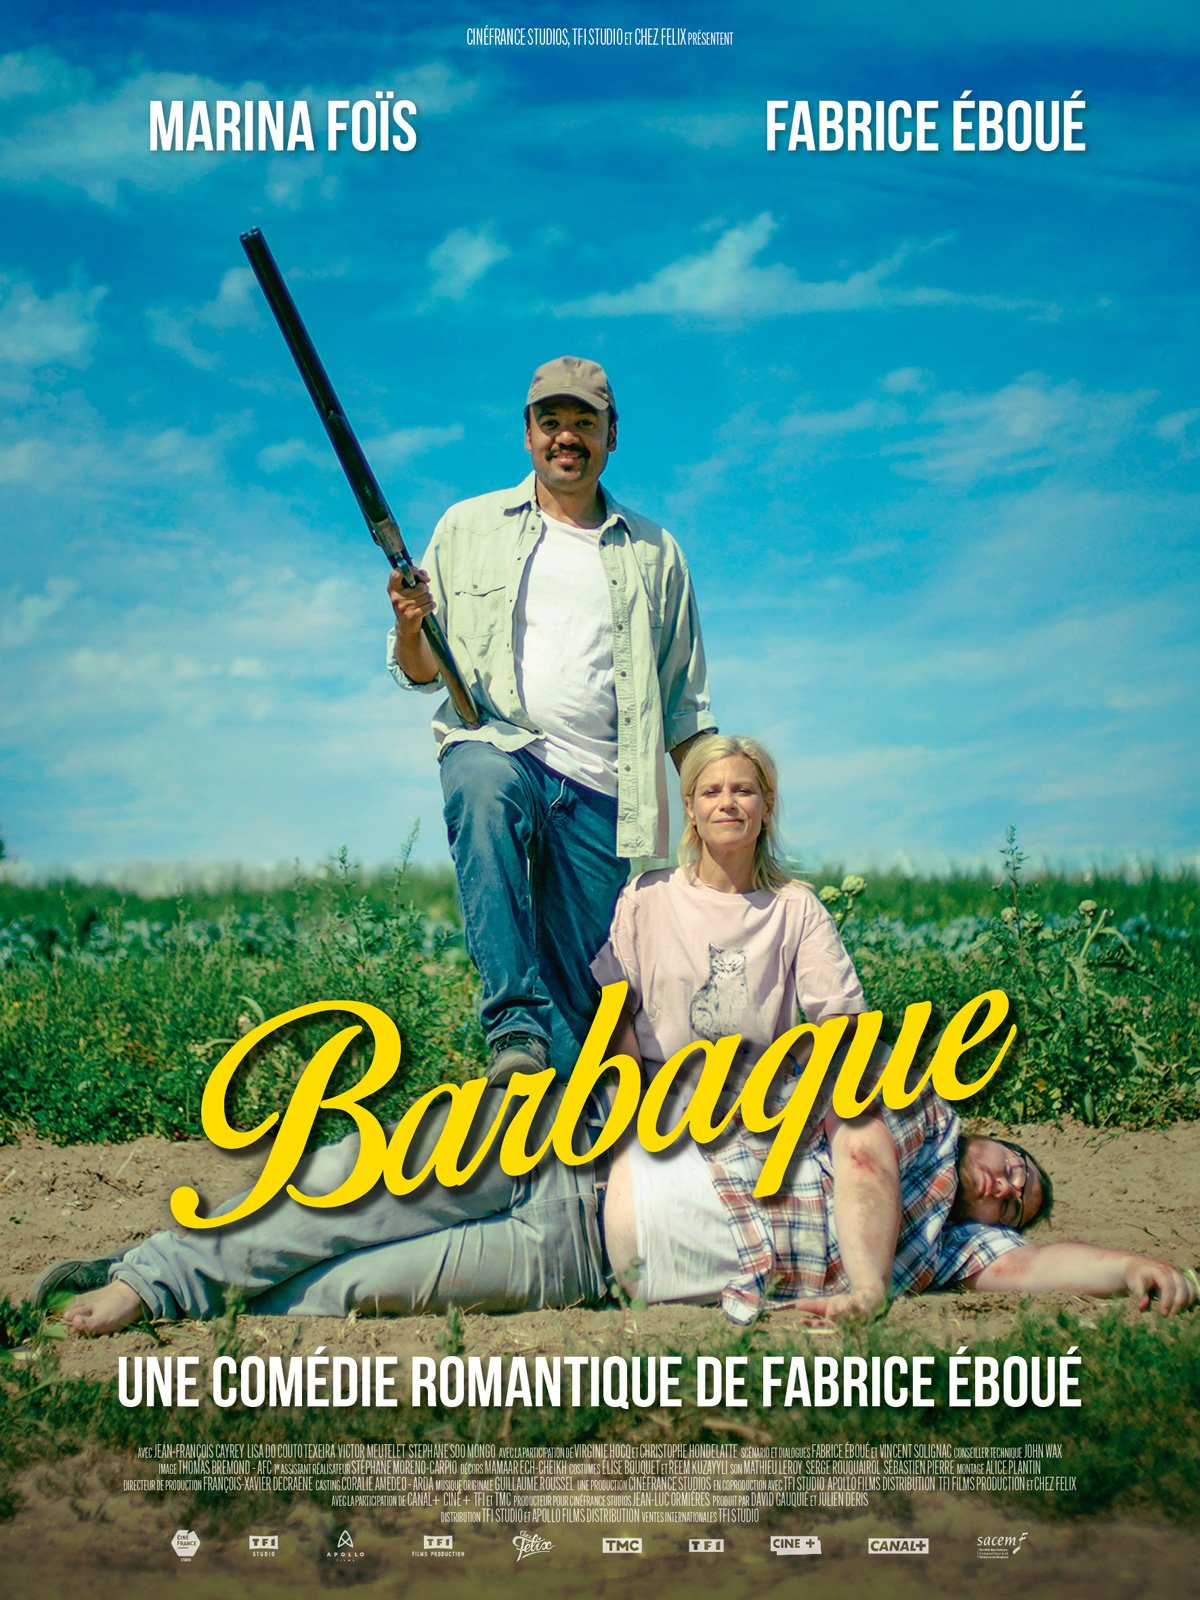 Barbaque - film 2020 - AlloCiné